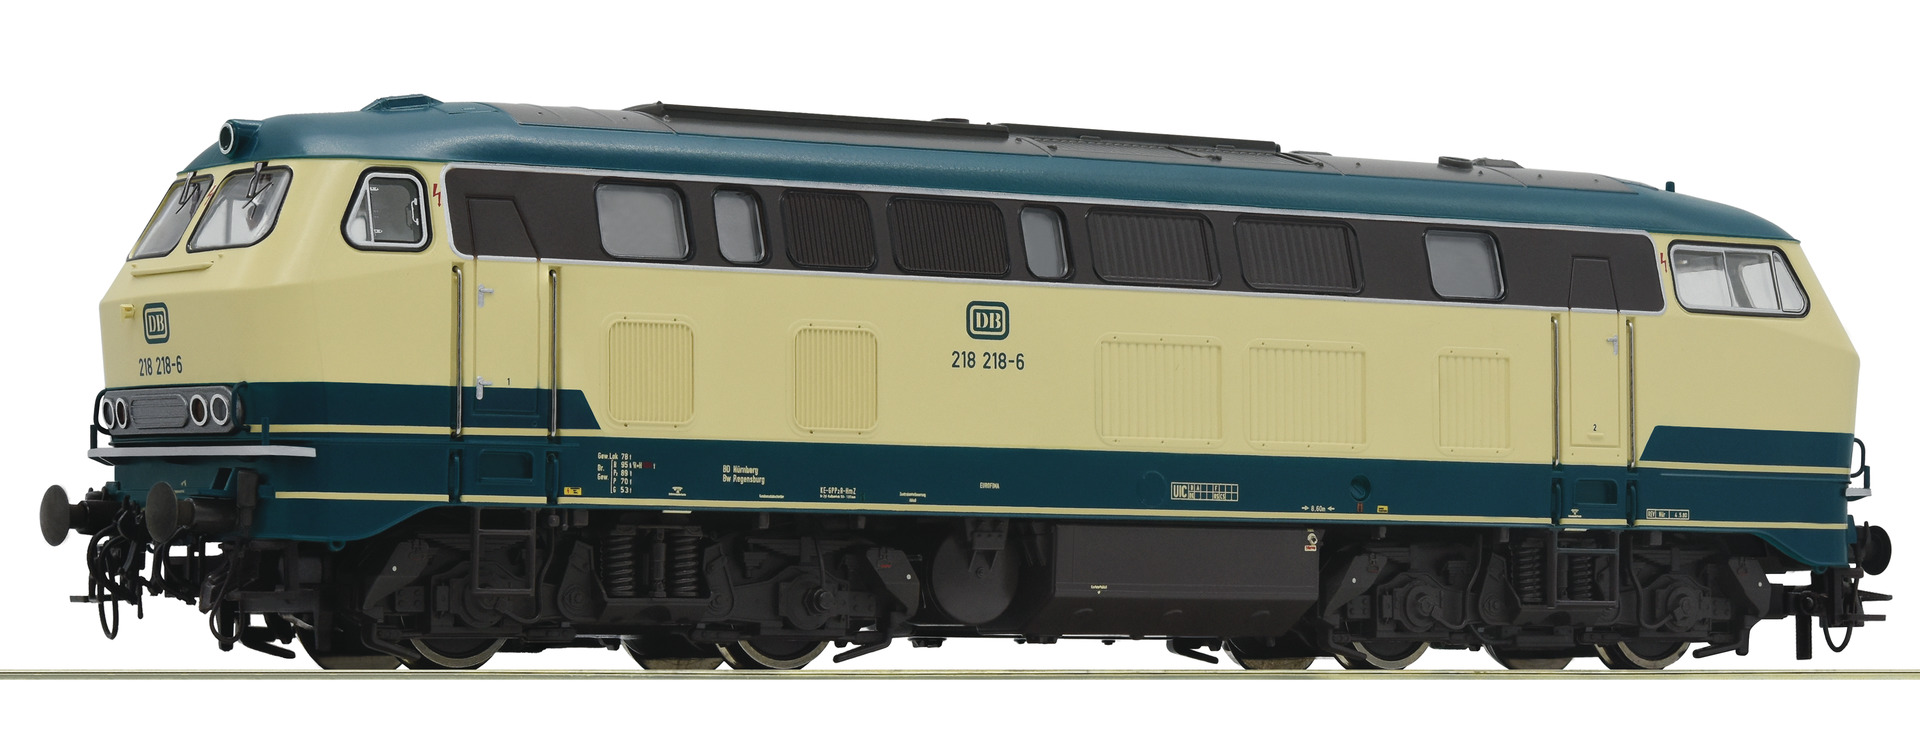 ROCO DB BR218 218-6 Diesel Locomotive IV